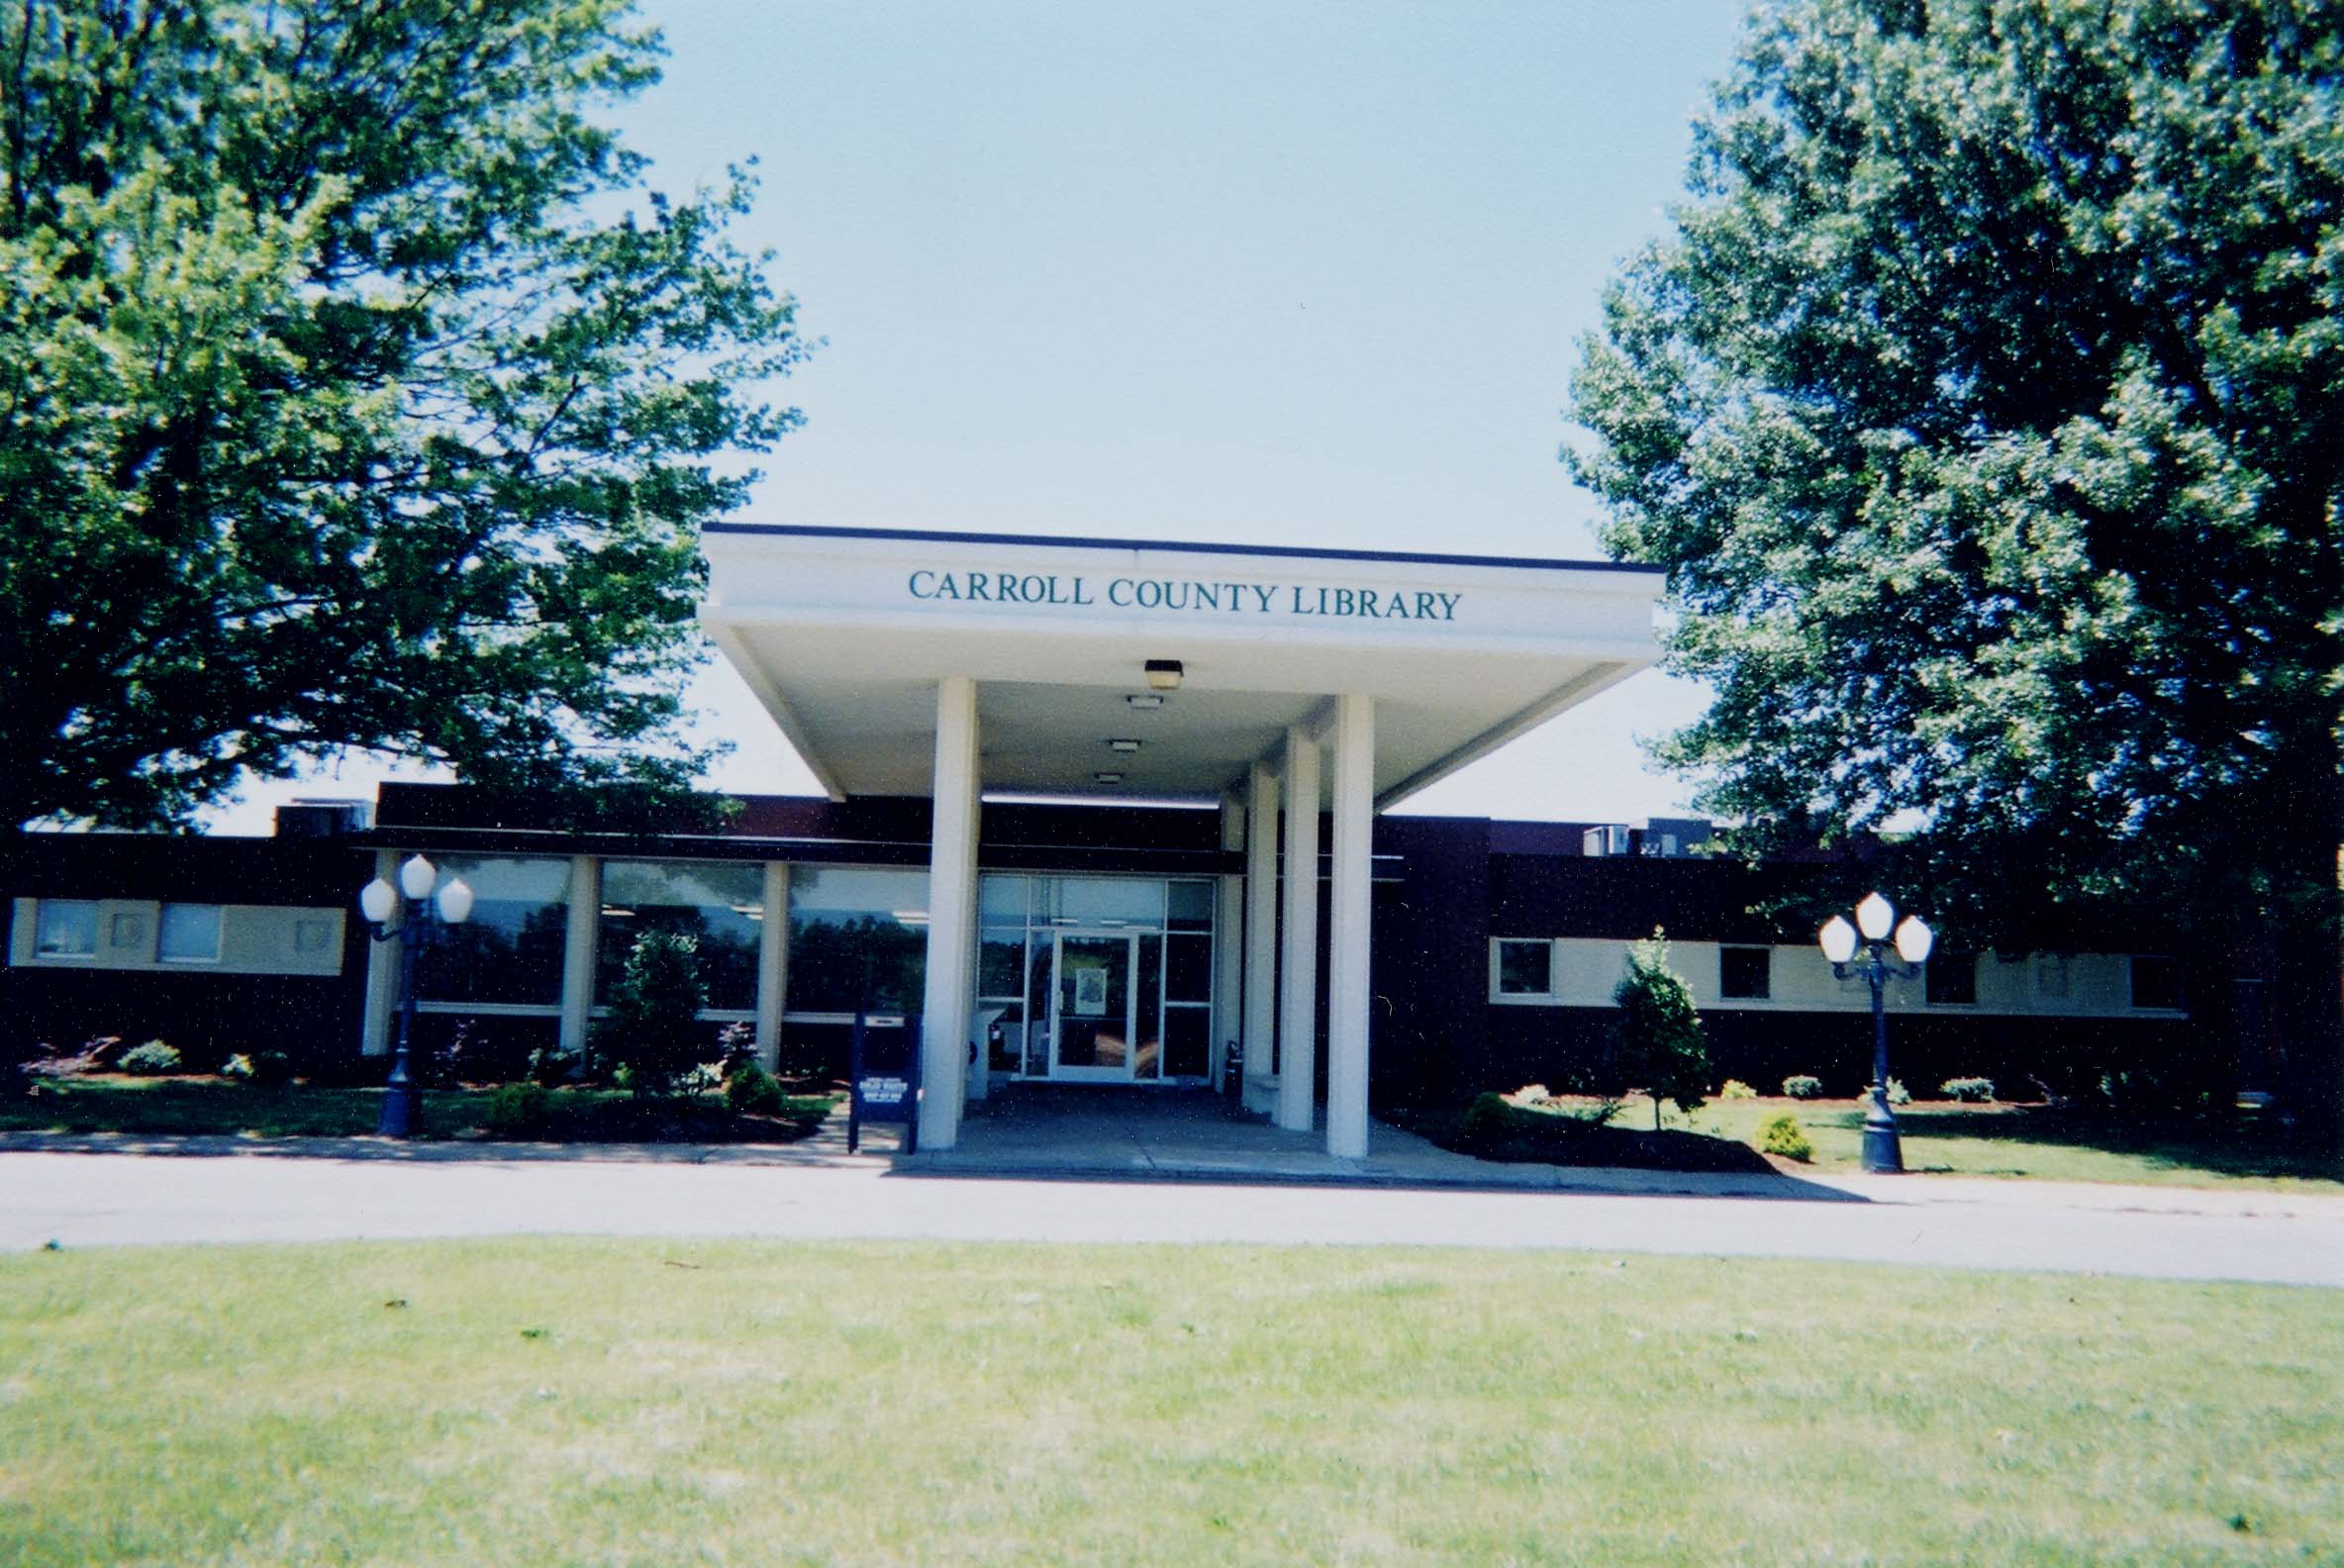 Carroll County Library